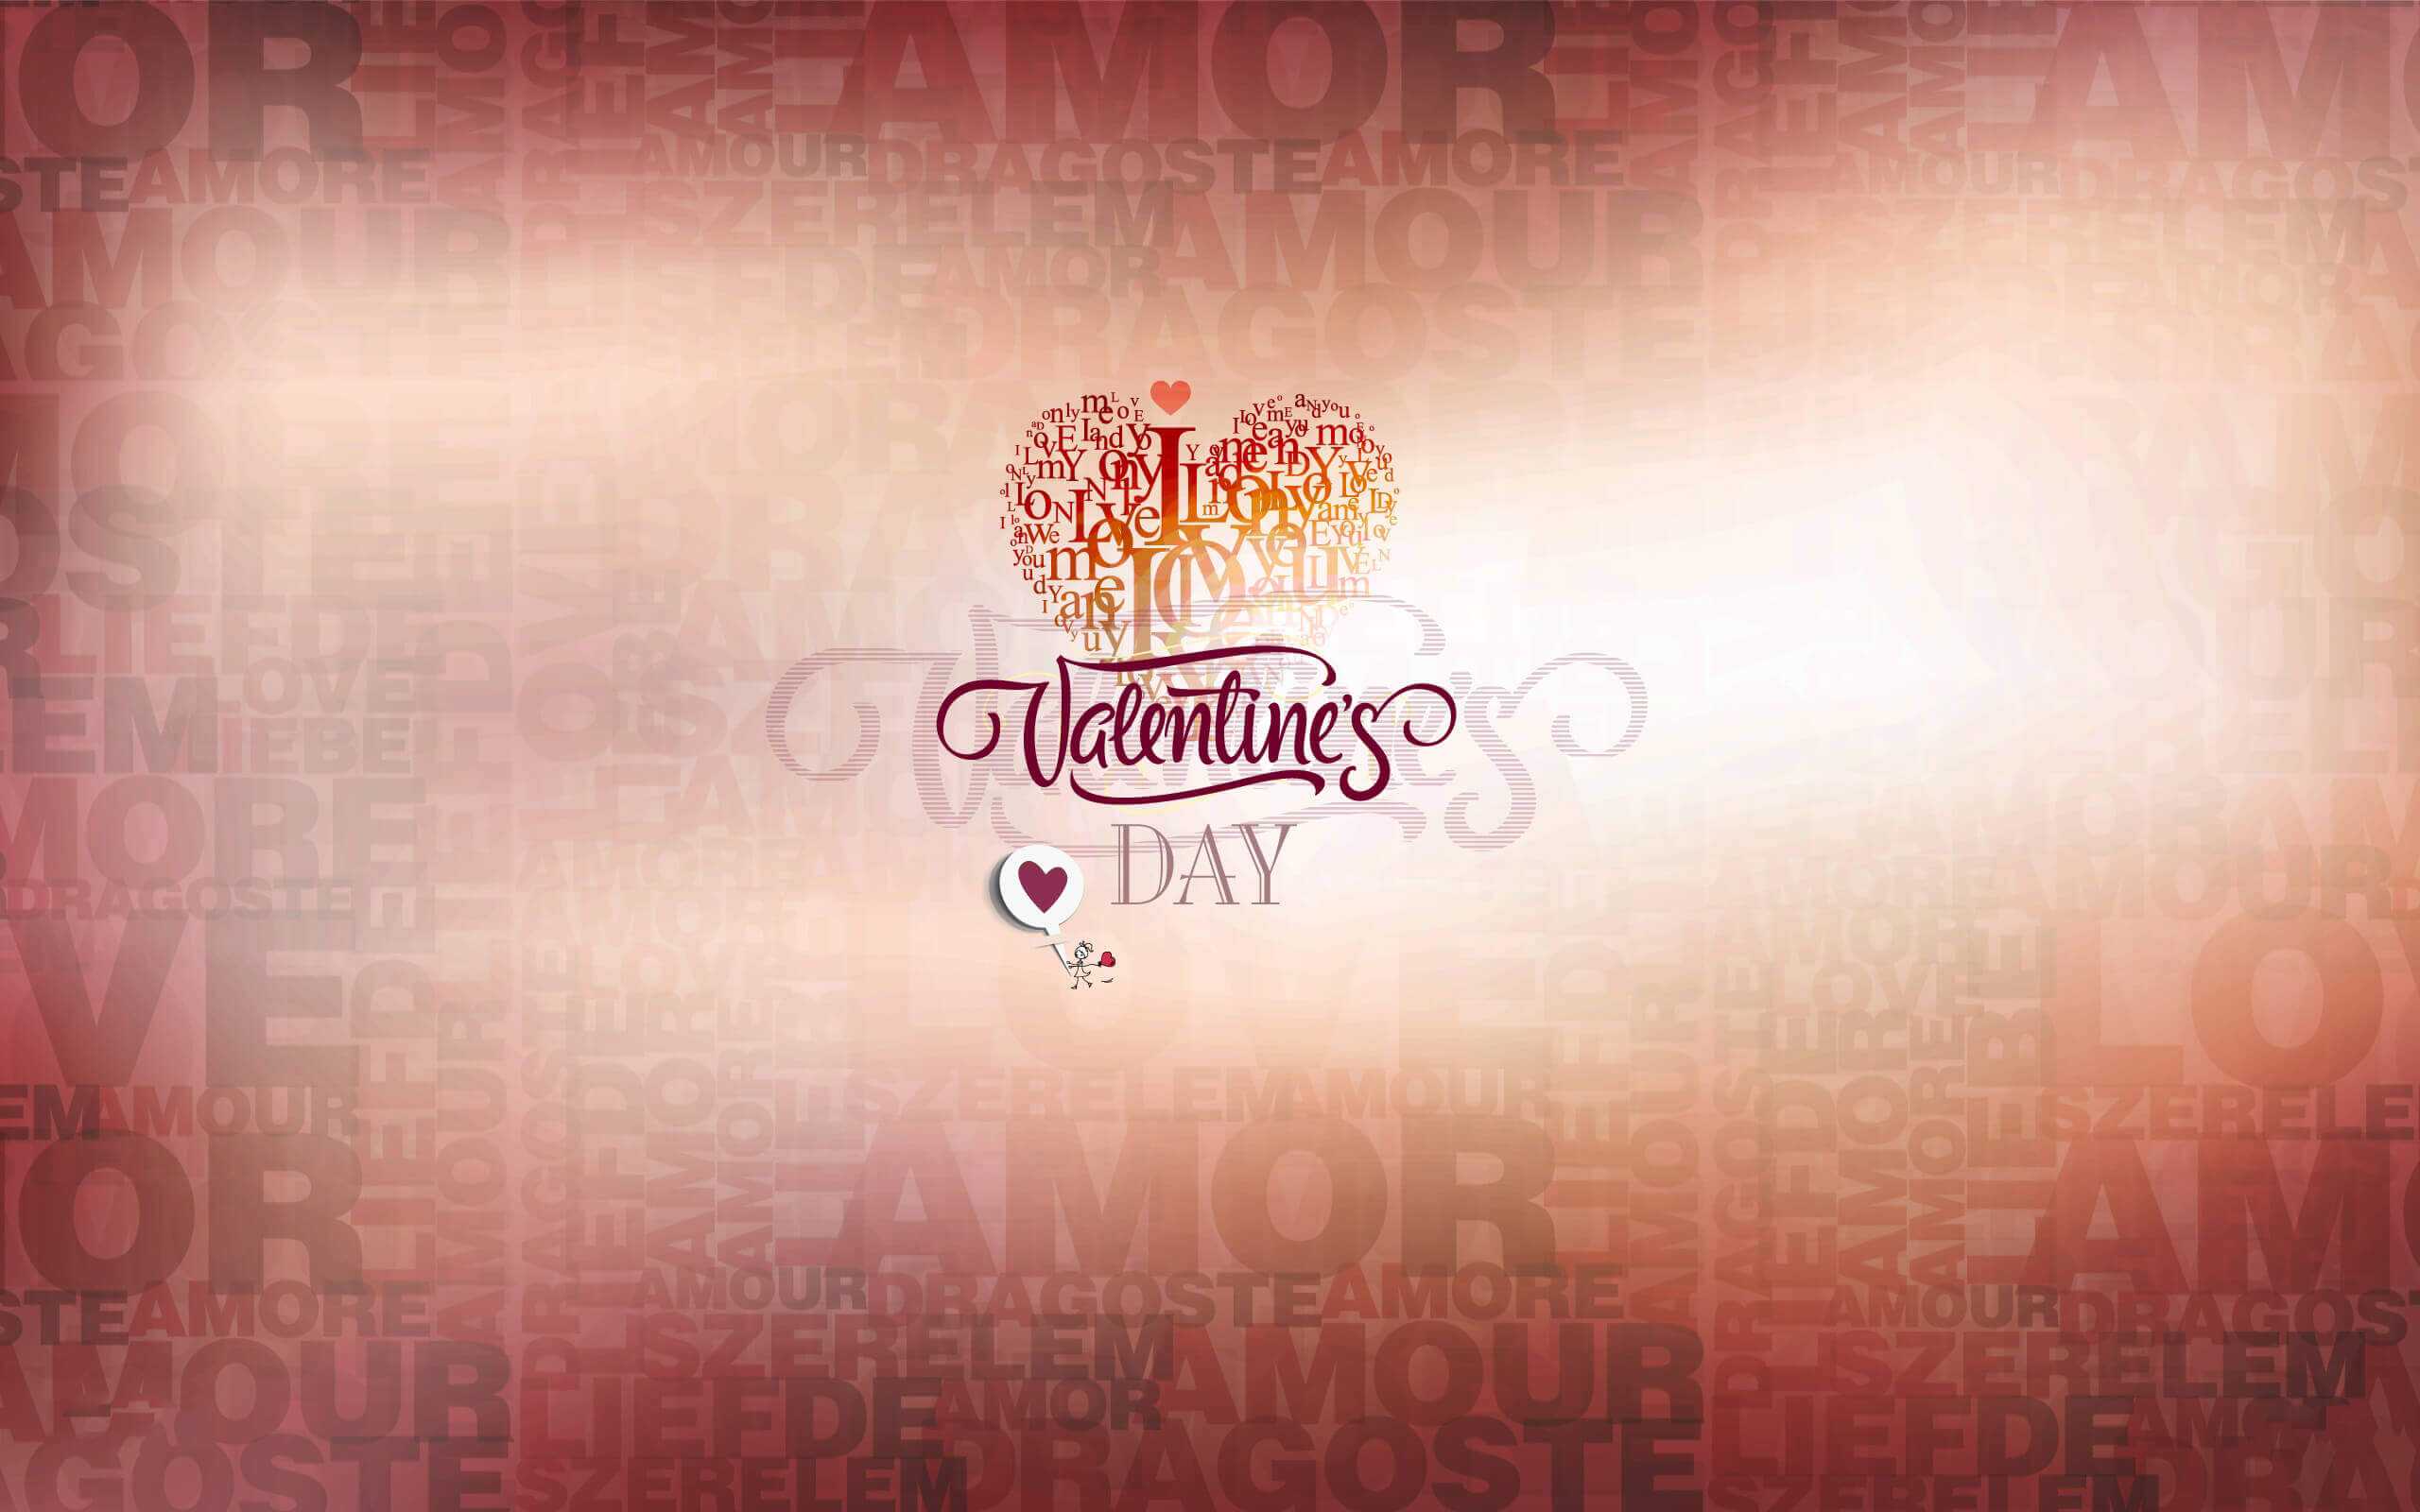 Valentines Day Wallpaper PC